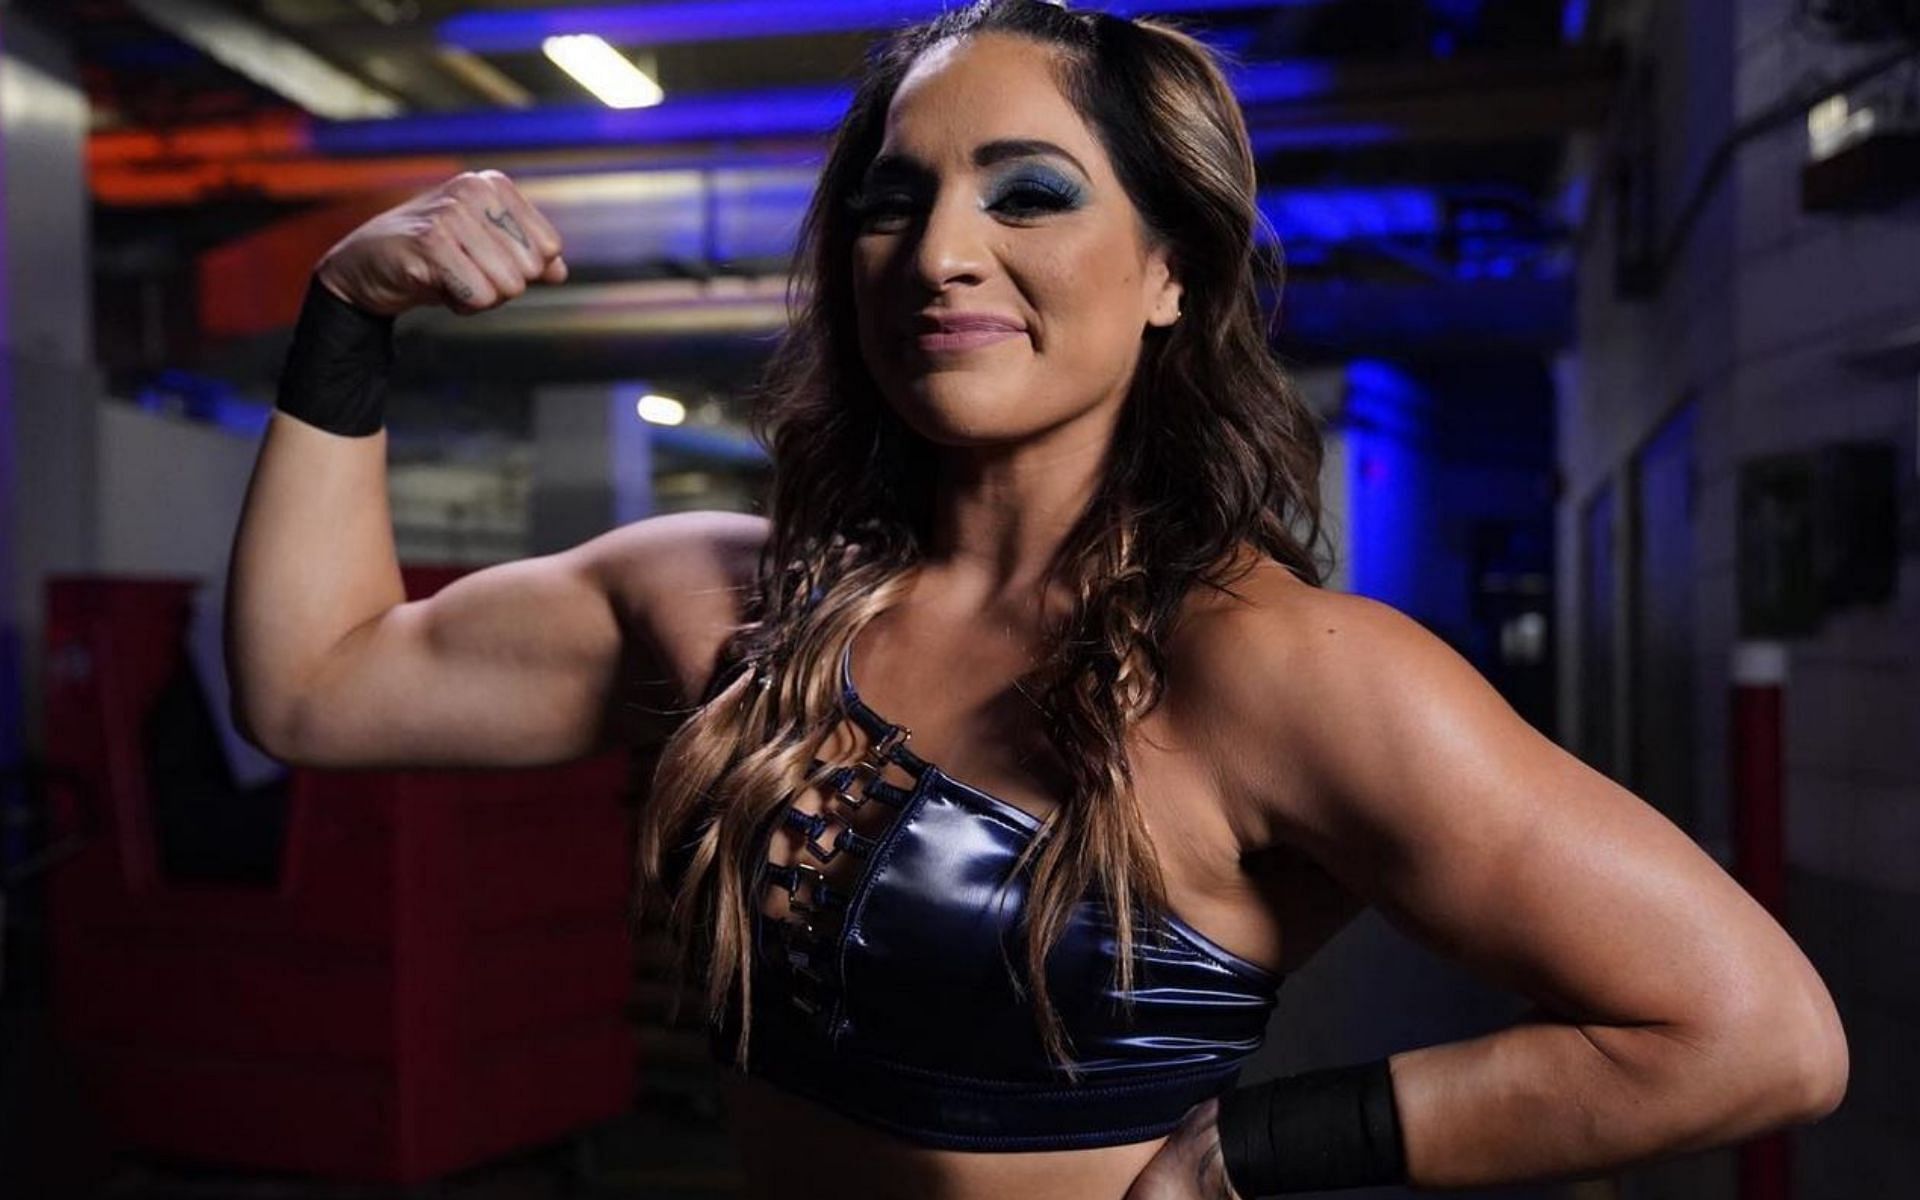 Raquel Rodriguez is a former WWE Women